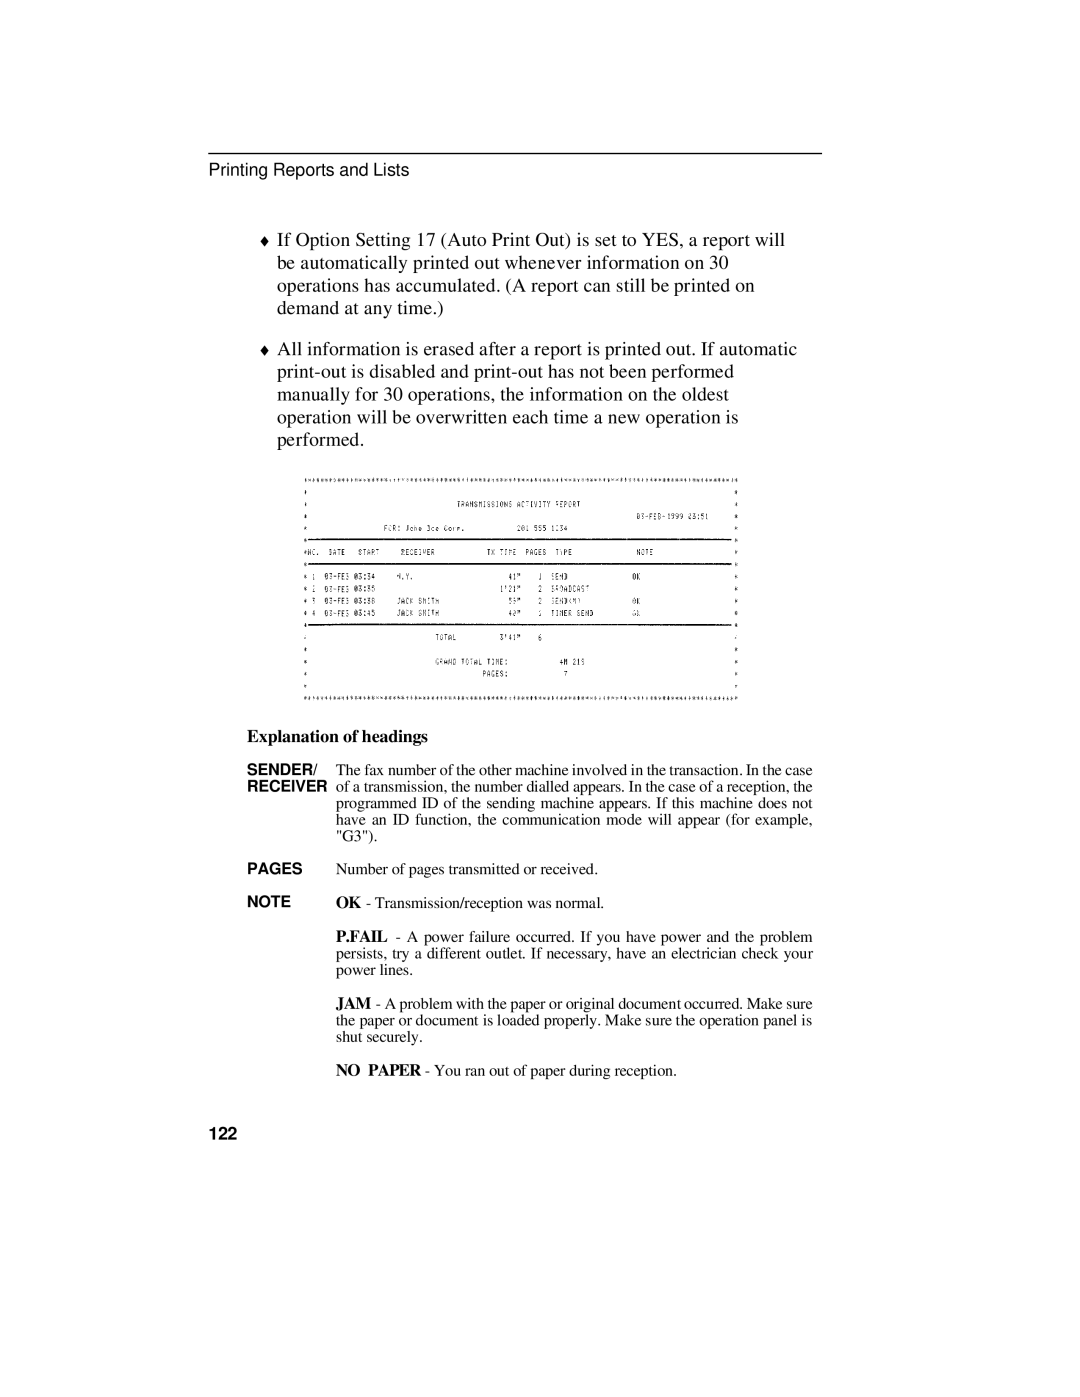 Sharp UX-470 operation manual Explanation of headings, 122 